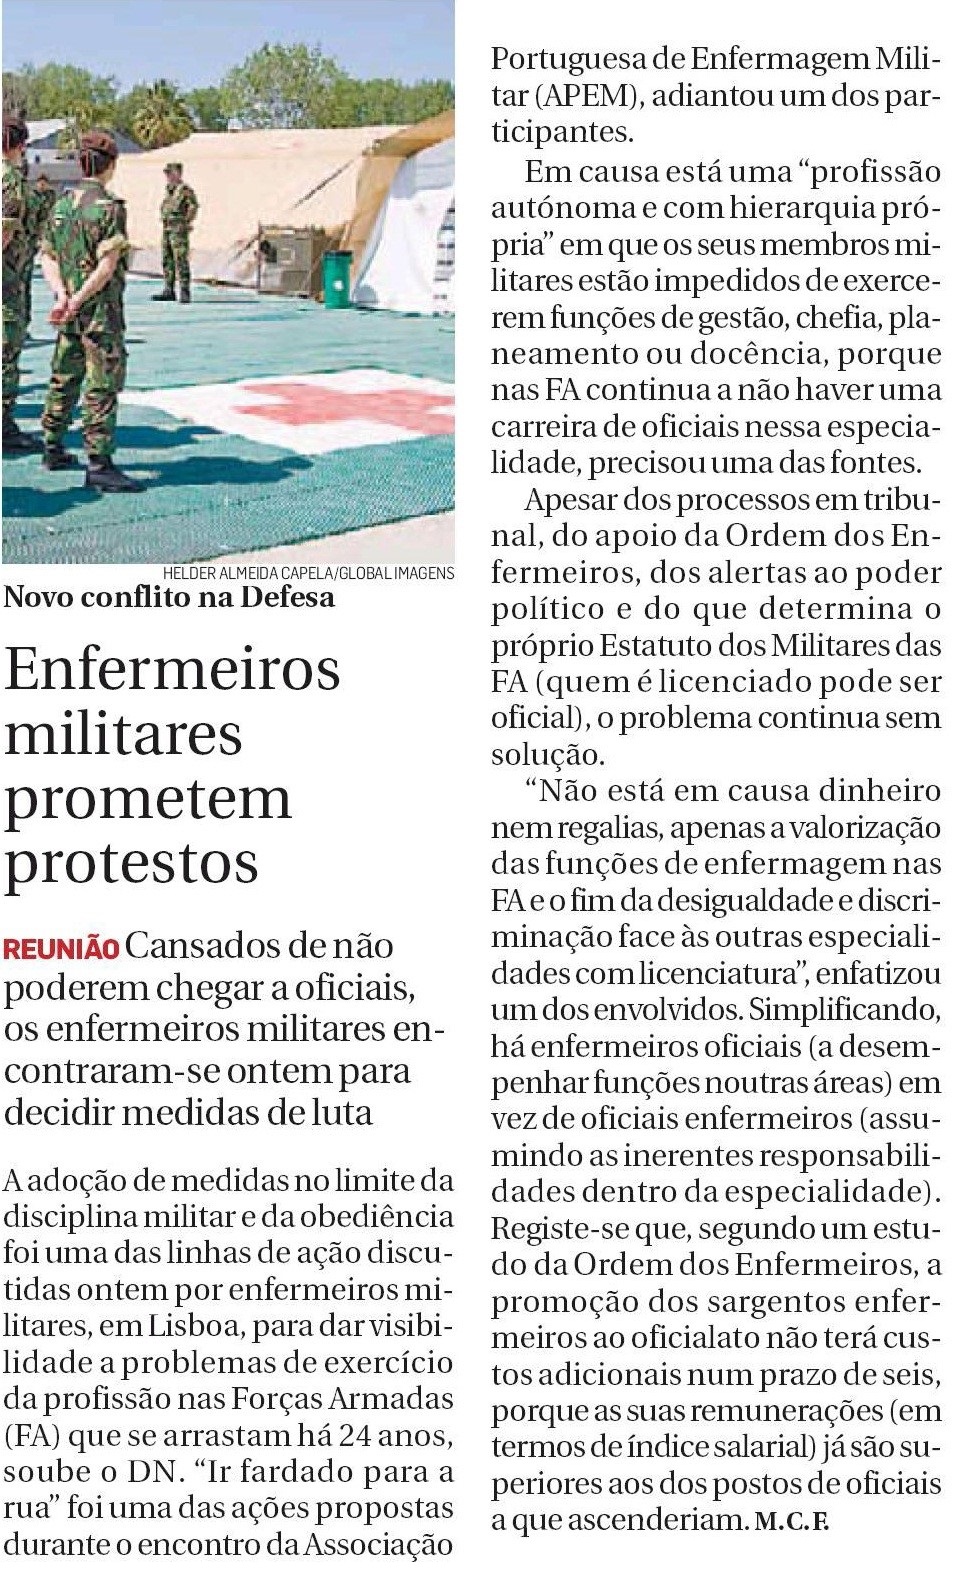 Enfermeiros Militares prometem protestos